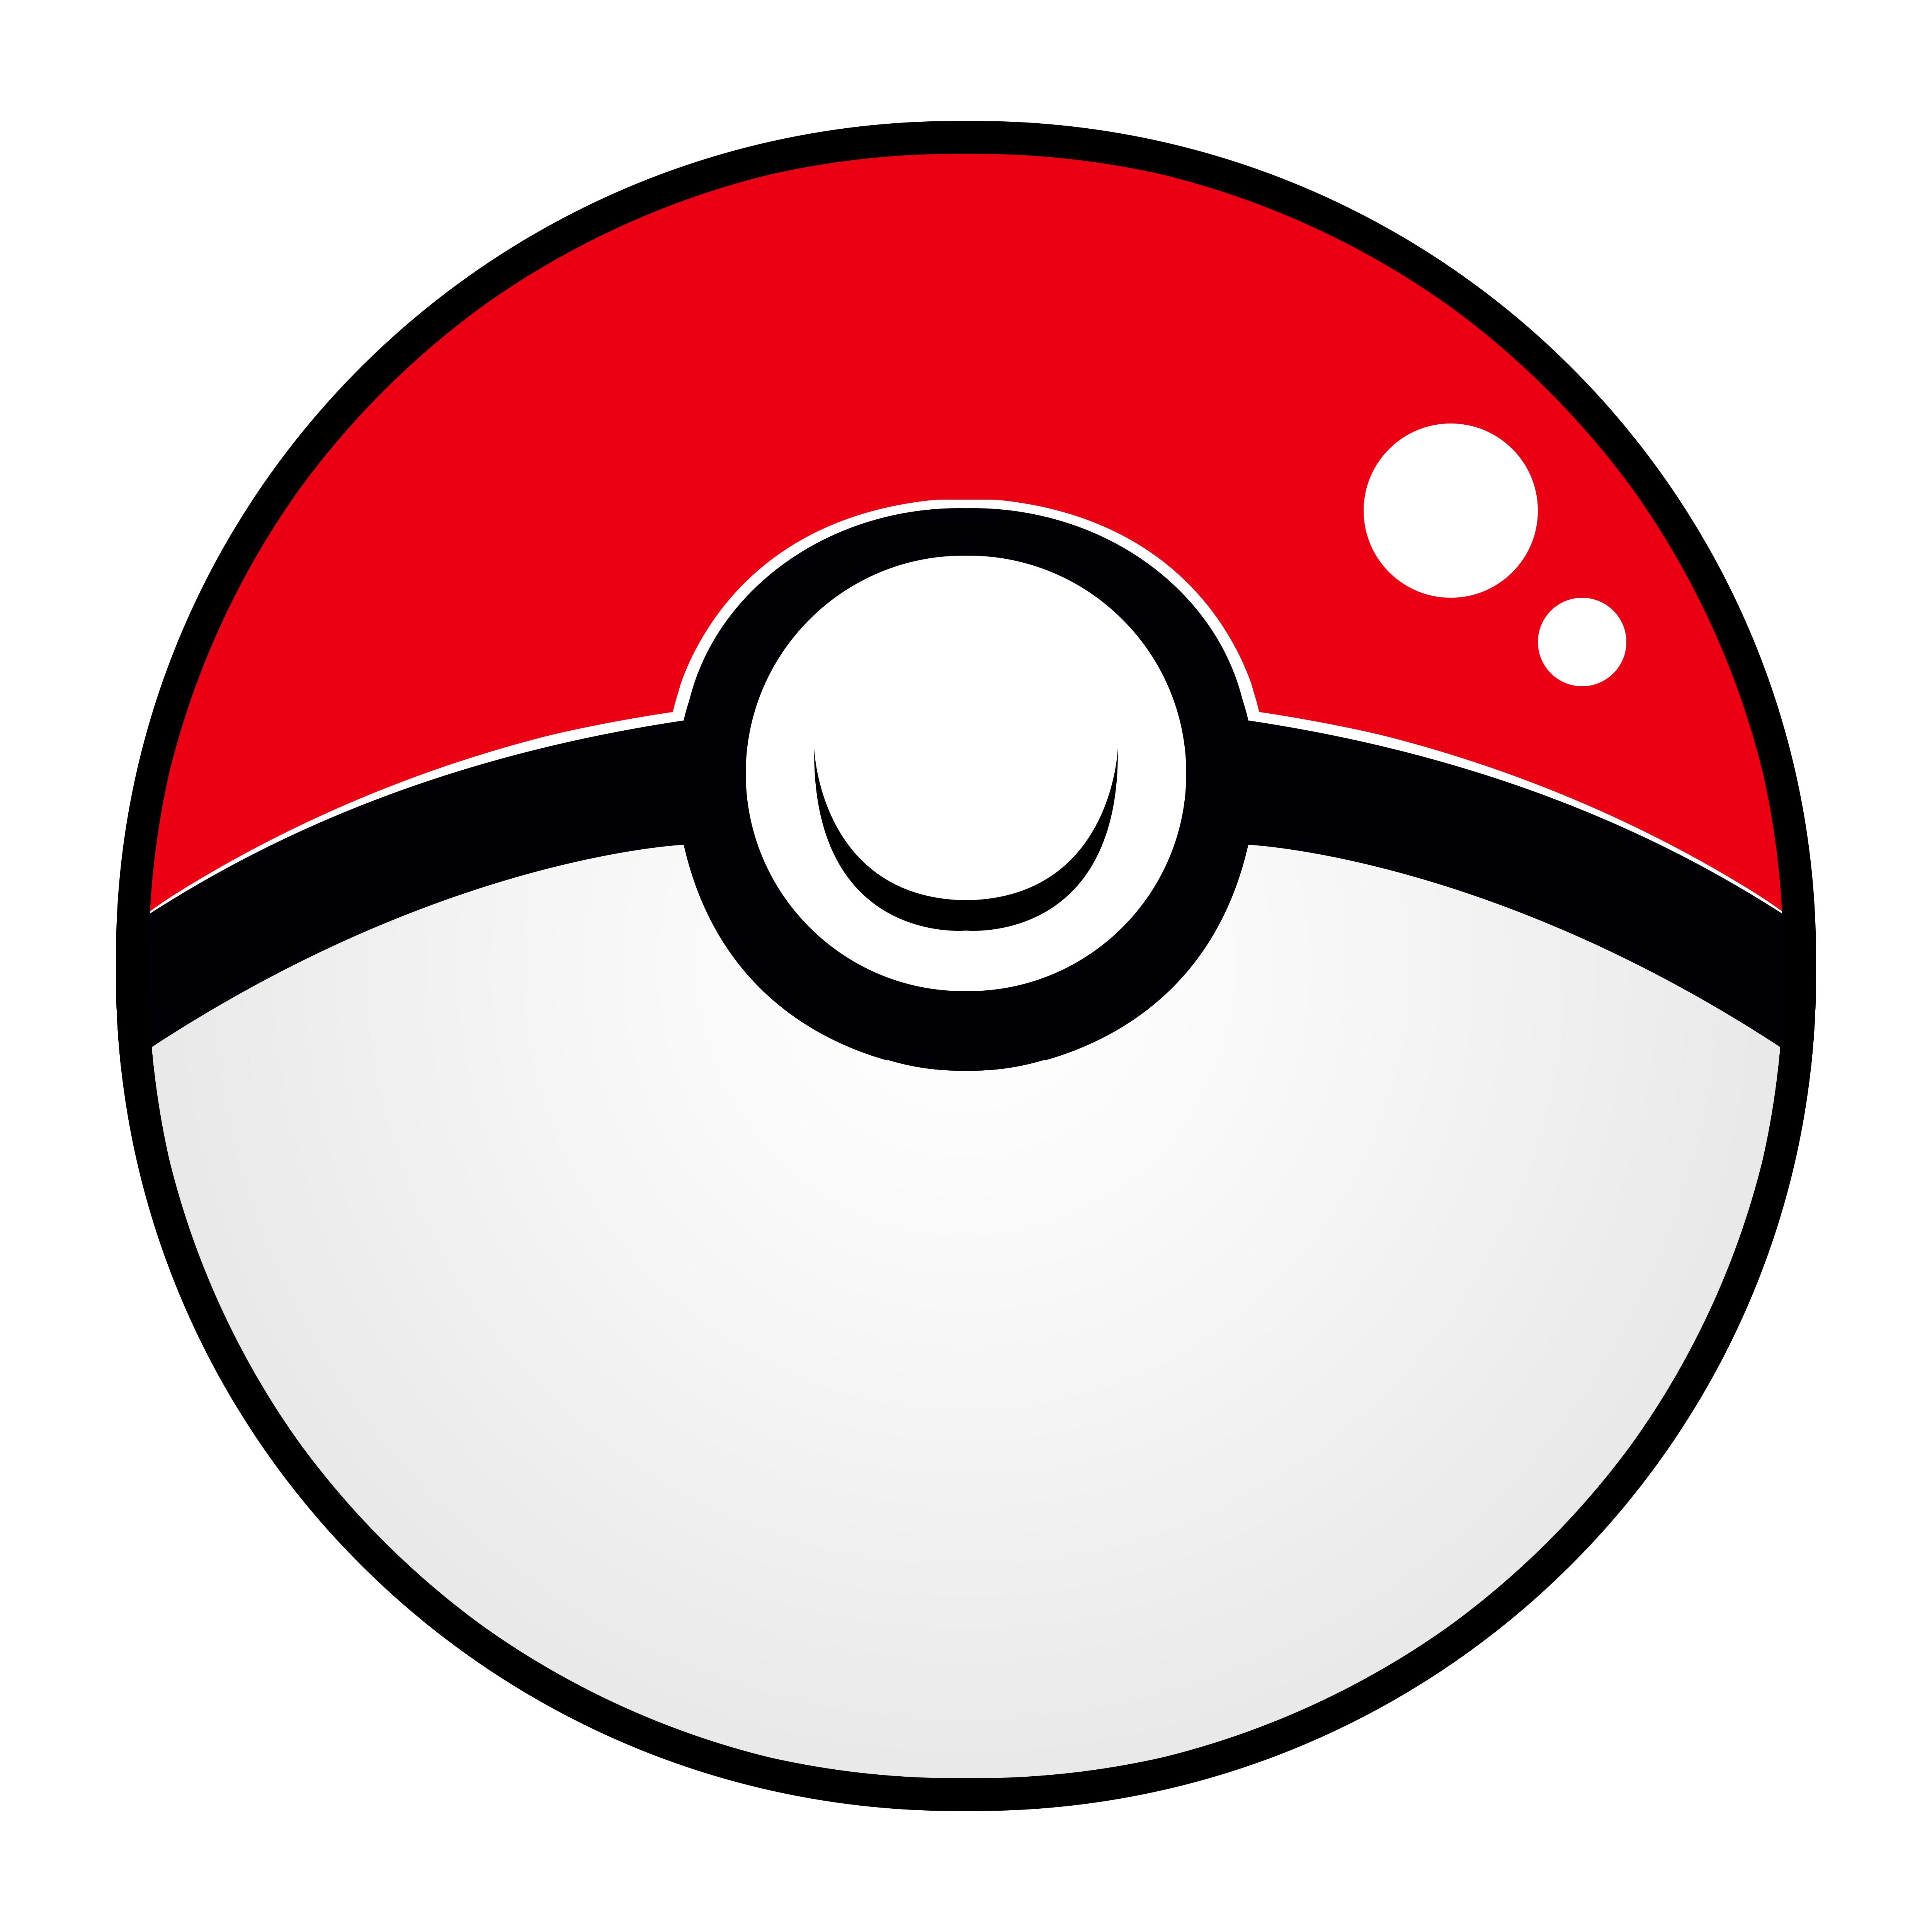 Pokeball Logo - Pokeball, pokemon ball PNG images free download